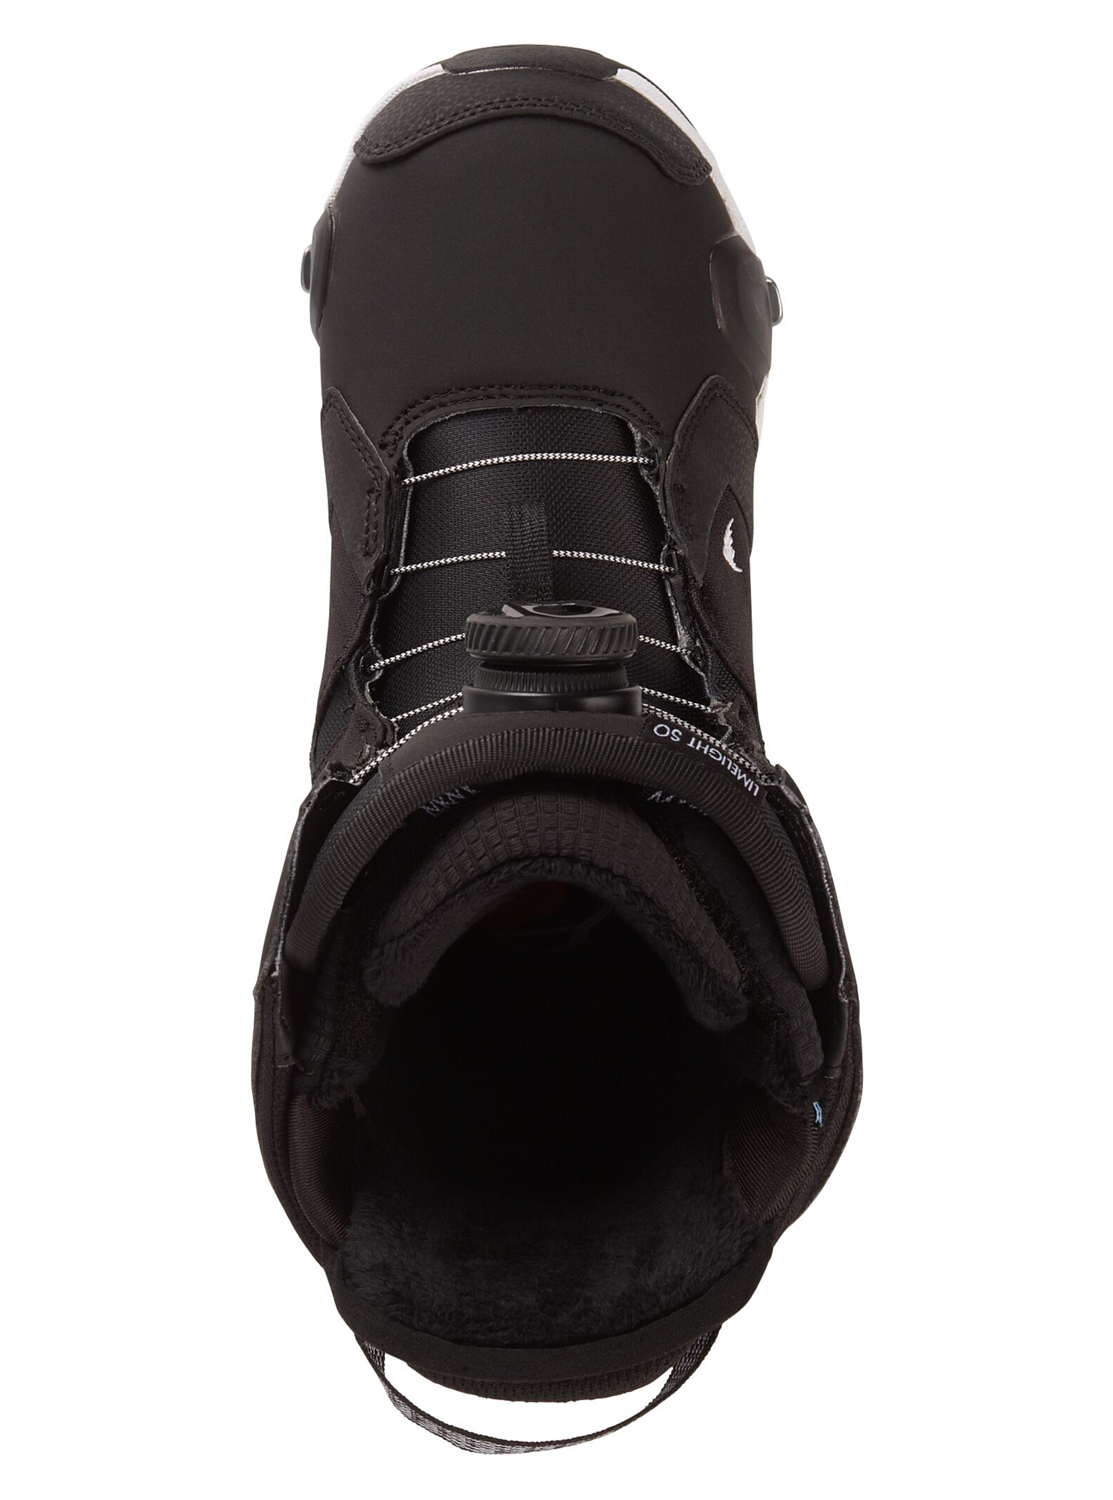 Ботинки для сноуборда BURTON 2019-20 Limelight Step On Black